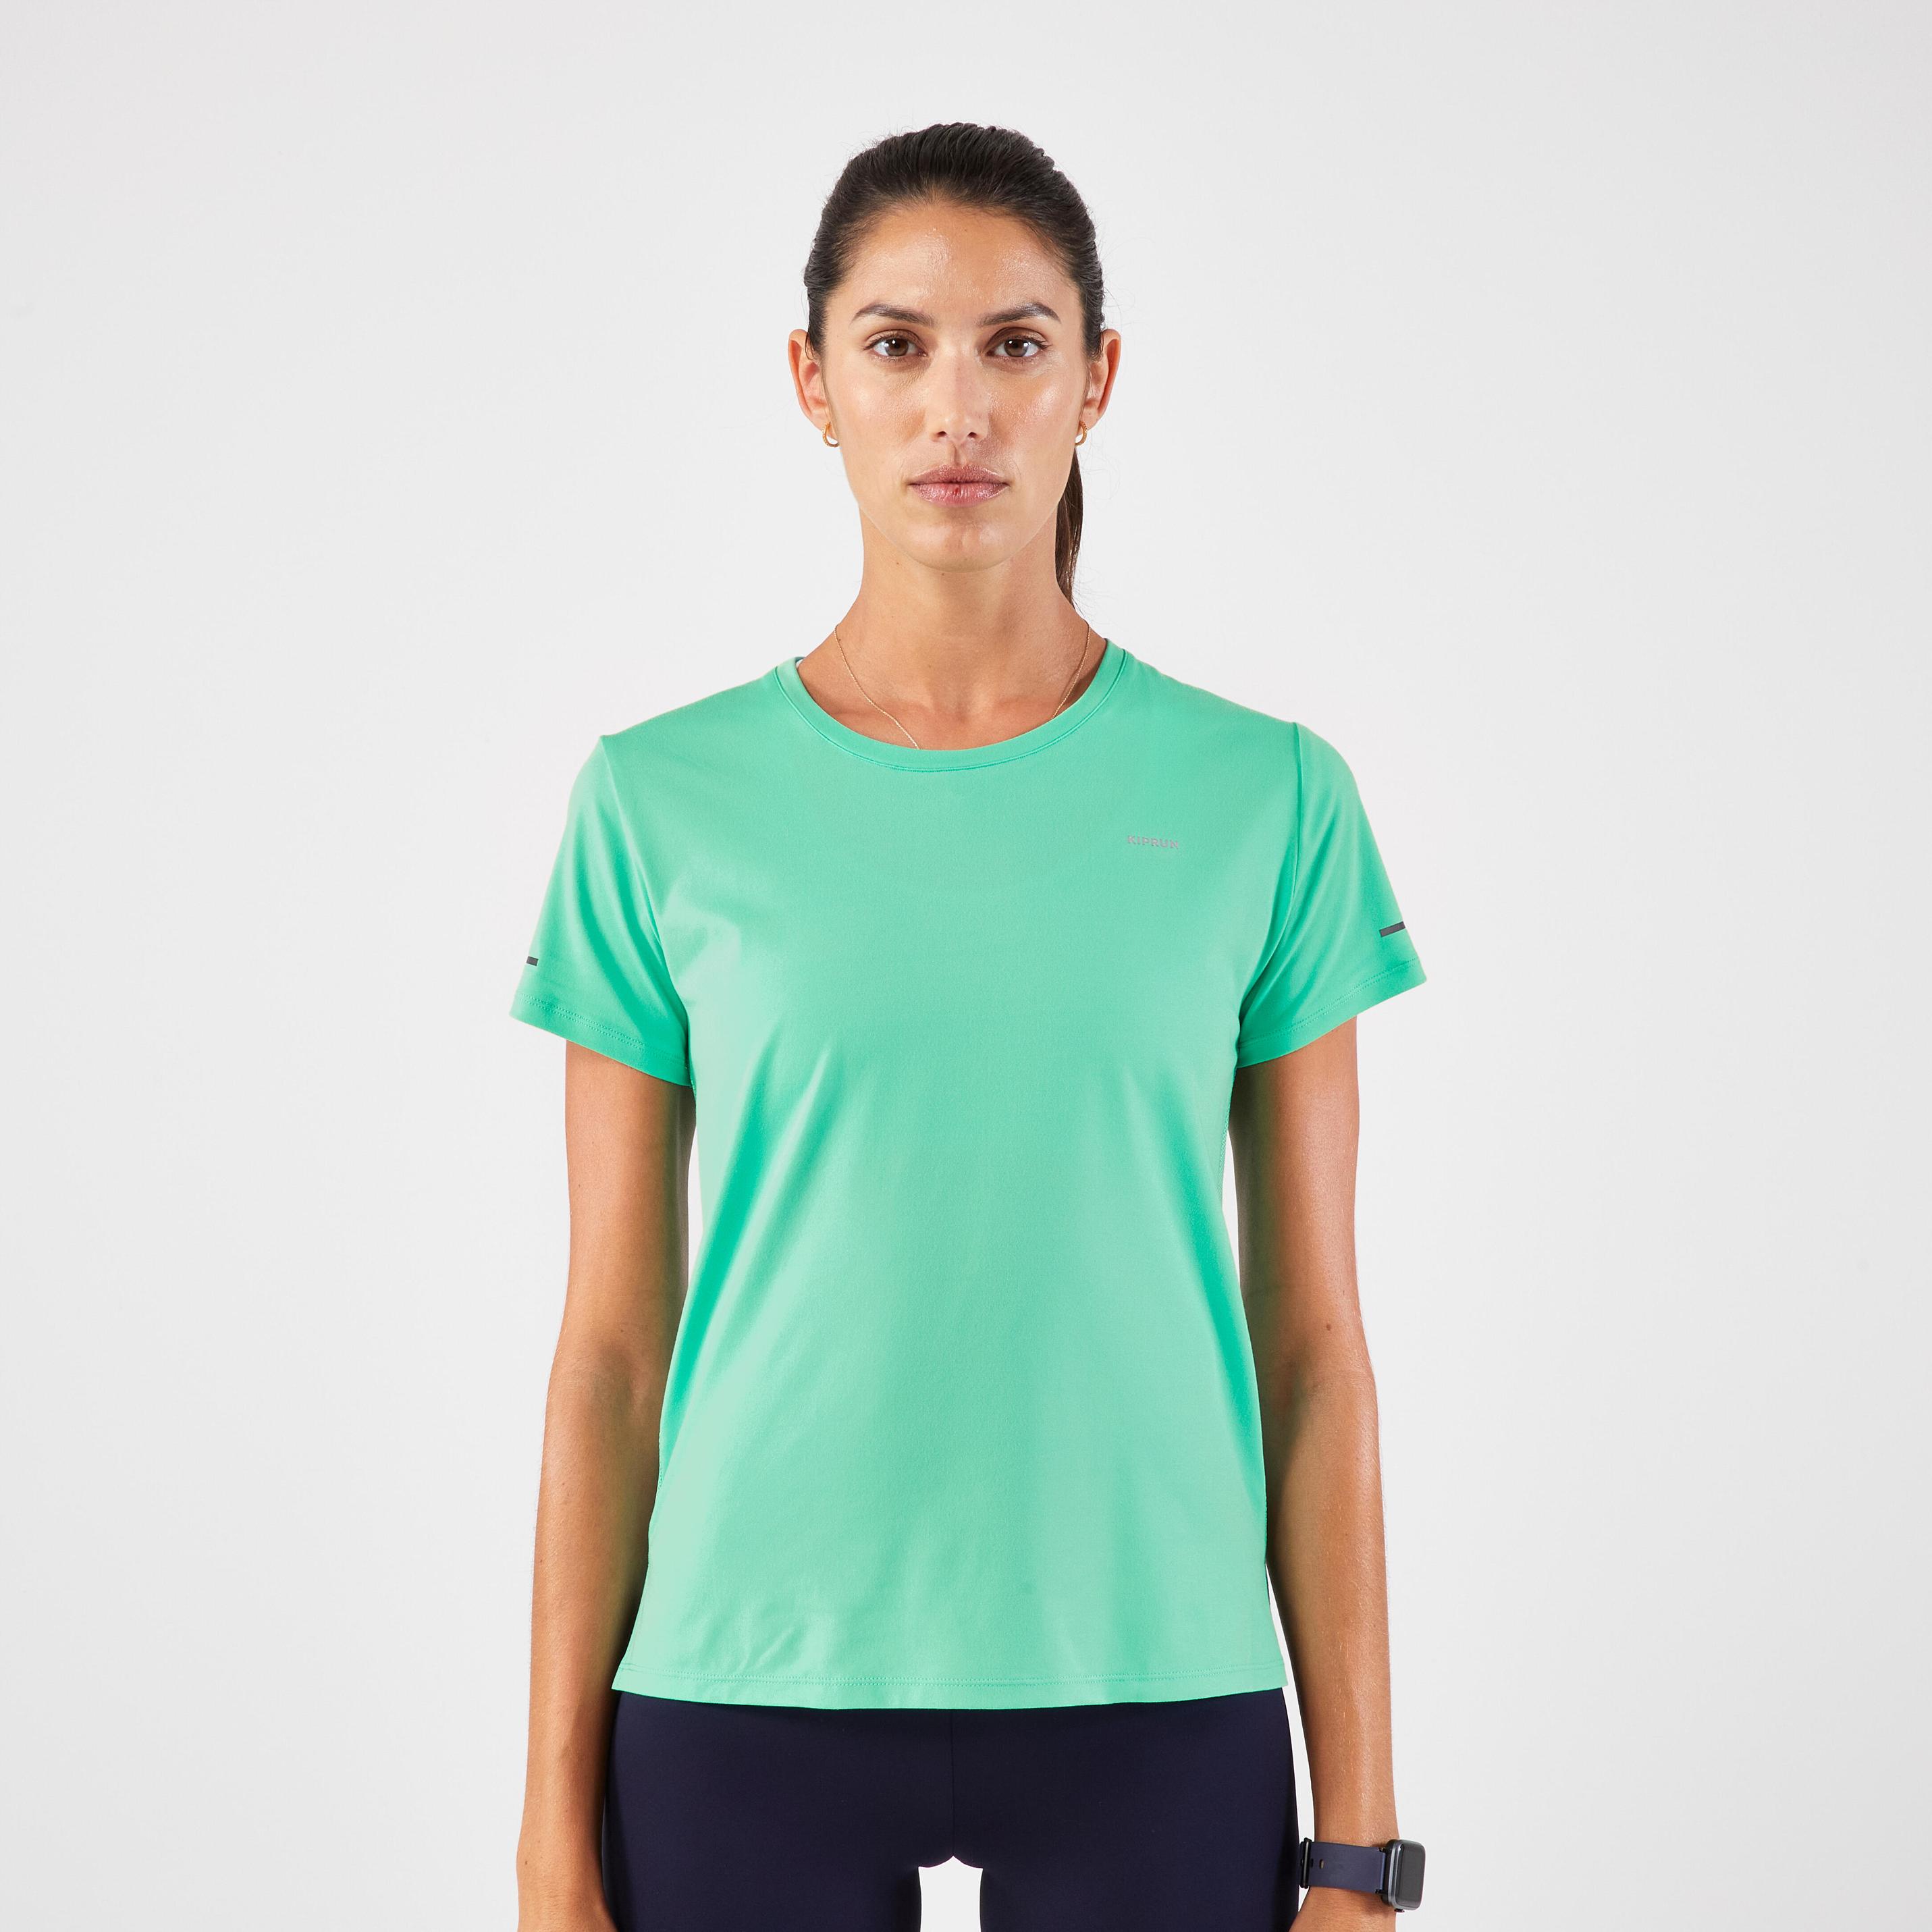 Laufshirt kurzarm Damen atmungsaktiv - Run 500 Dry grün für 12,99€ in Decathlon